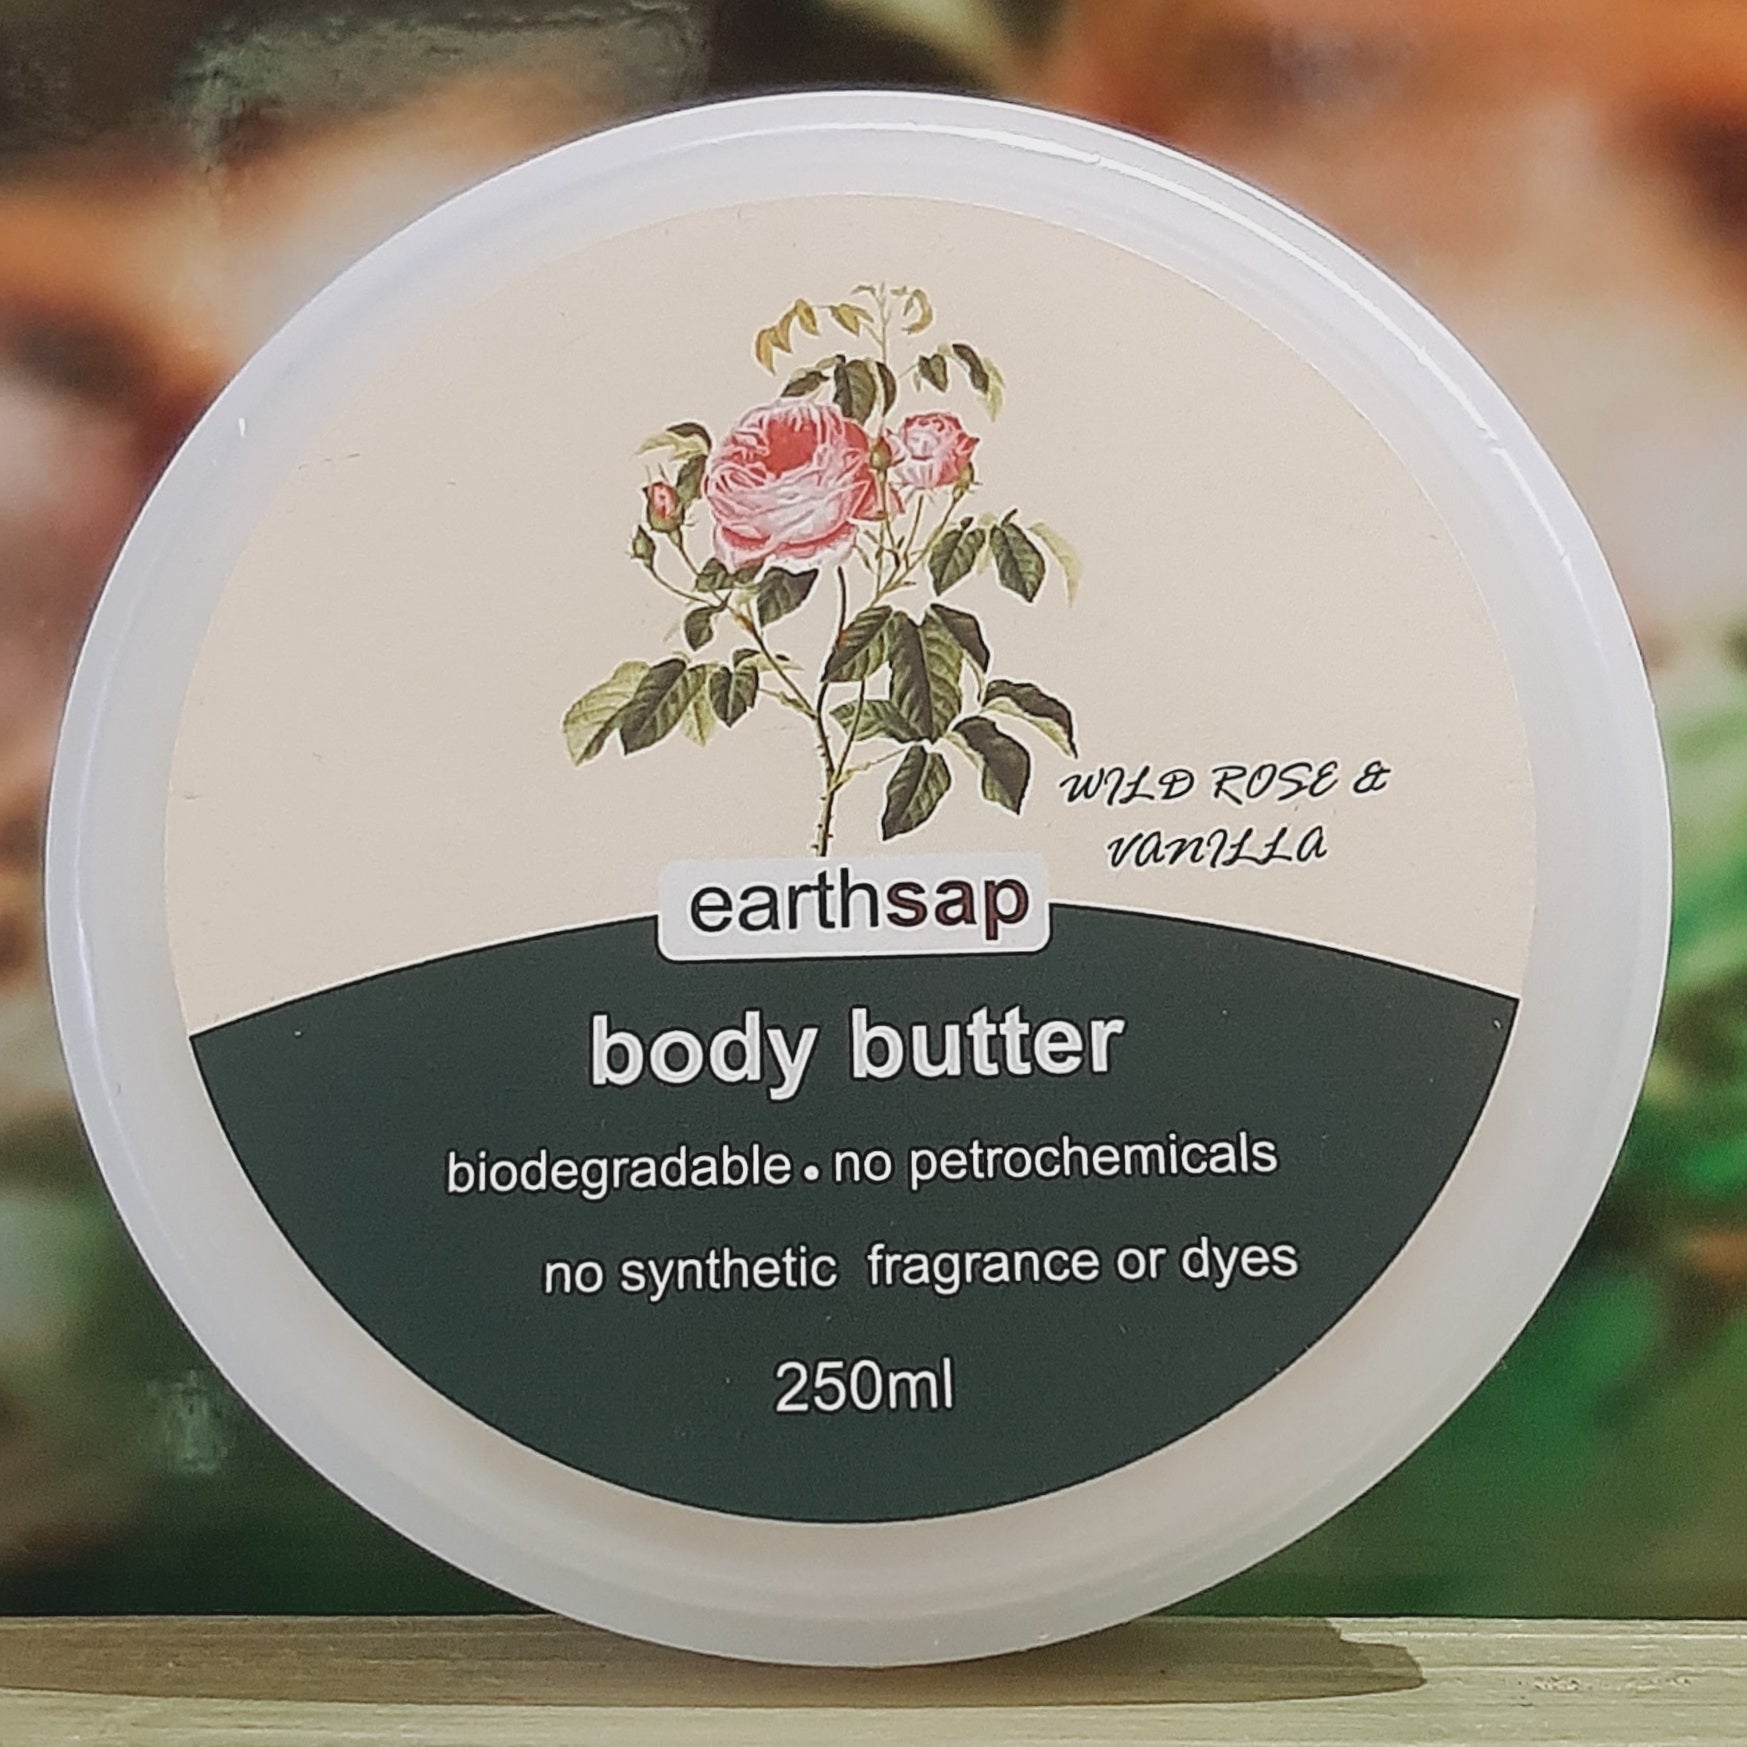 Earthsap Body Butter (Wild Rose & Vanilla) 250ml